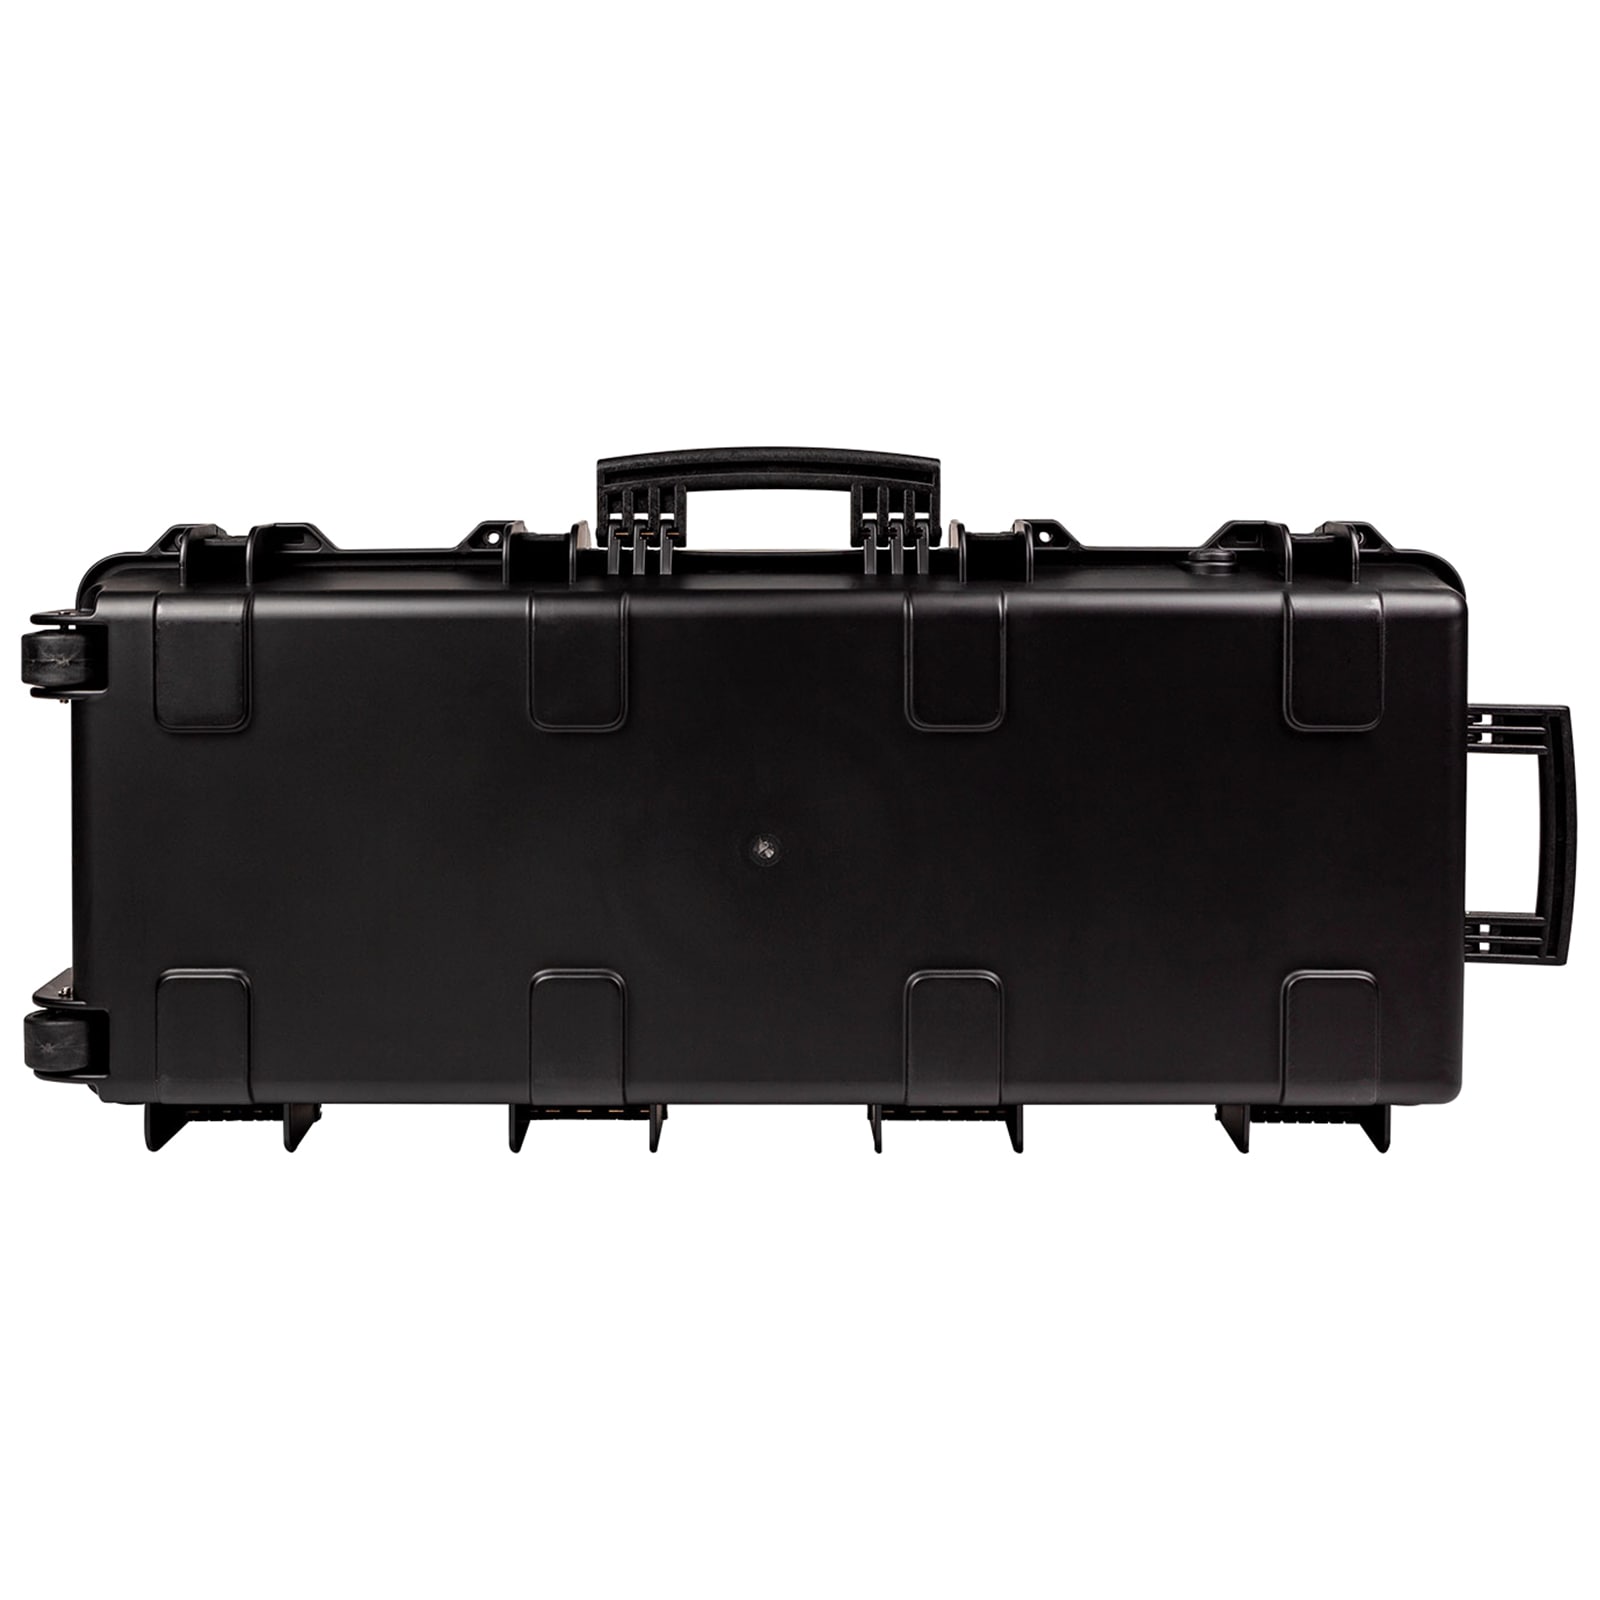 Walizka transportowa ASG Hard Case 980 x 430 x 200 mm - Black